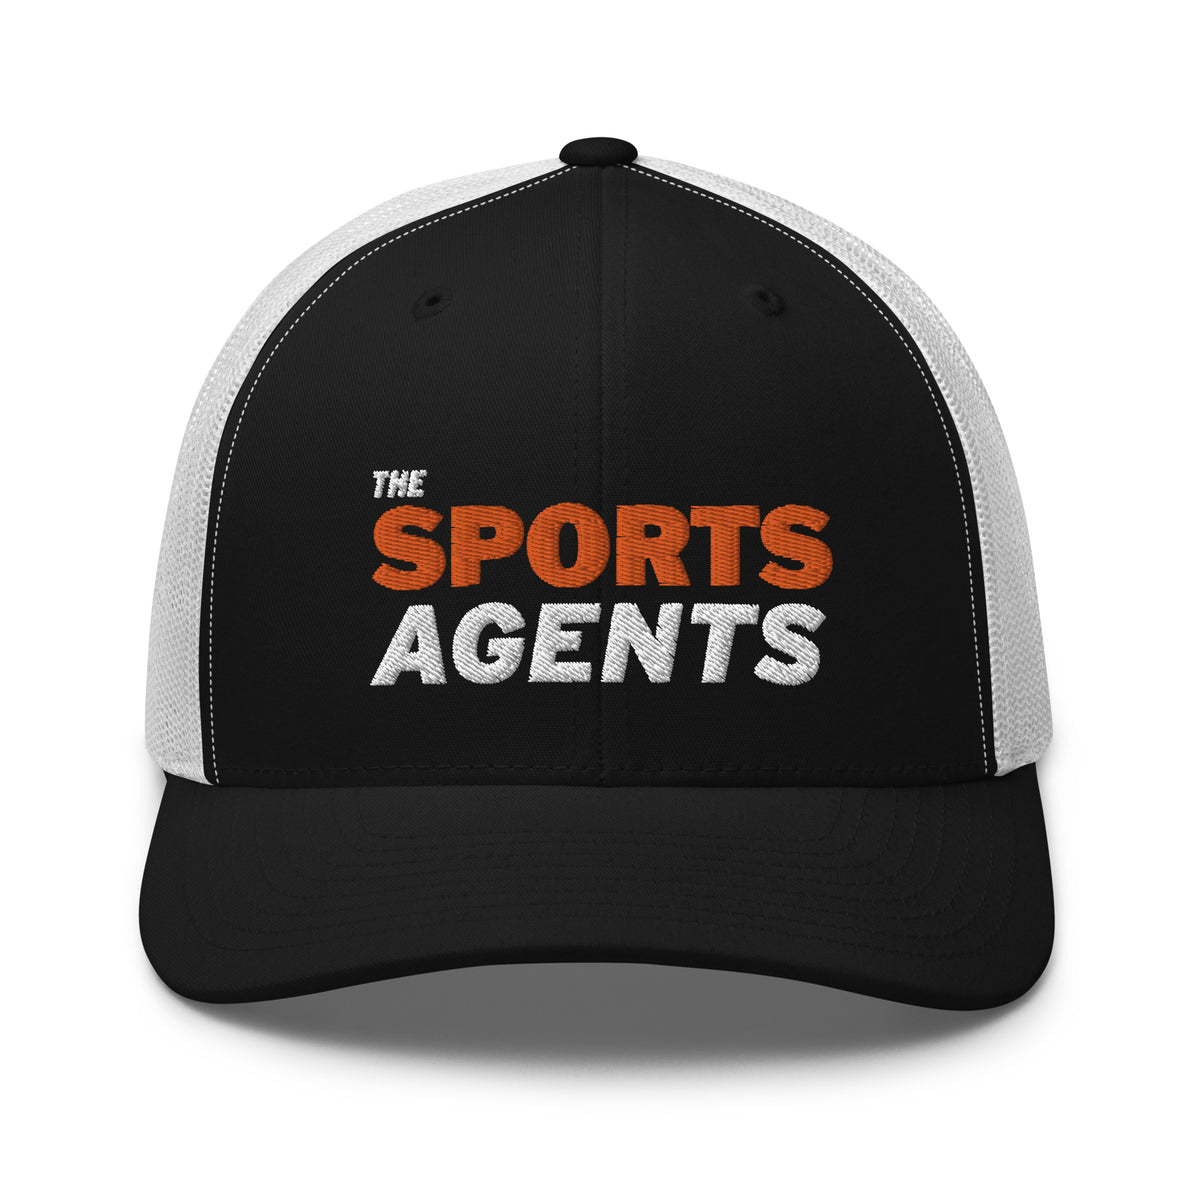 The Sports Agents Black Trucker Cap